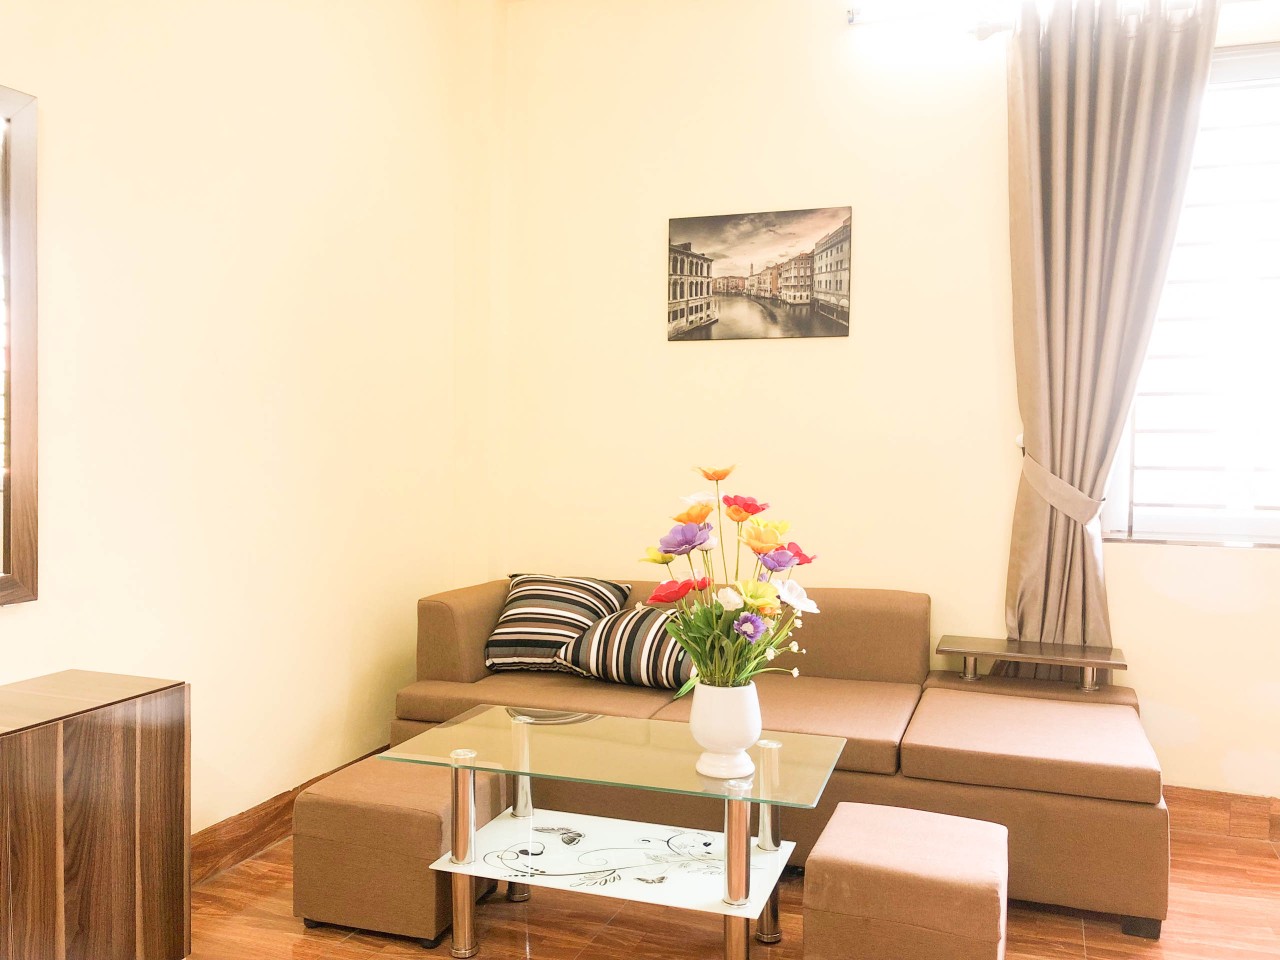 Intercon Apartment Rental in Me Tri Area, Near Keangnam Tower @Budget Price